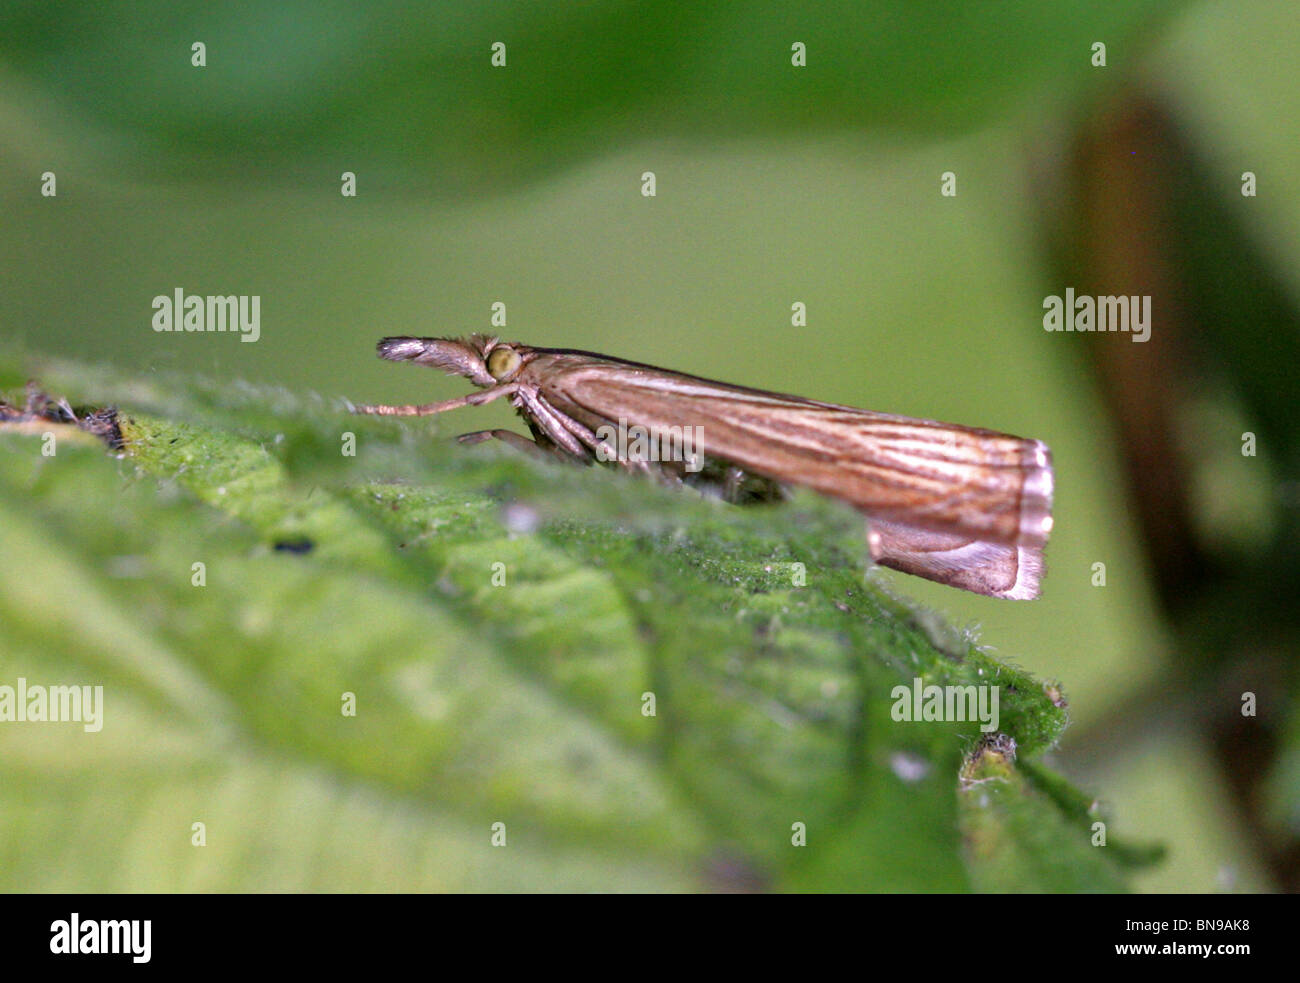 Hocico Crambid Moth, Crambus sp.,, Lepidoptera Crambidae. Foto de stock